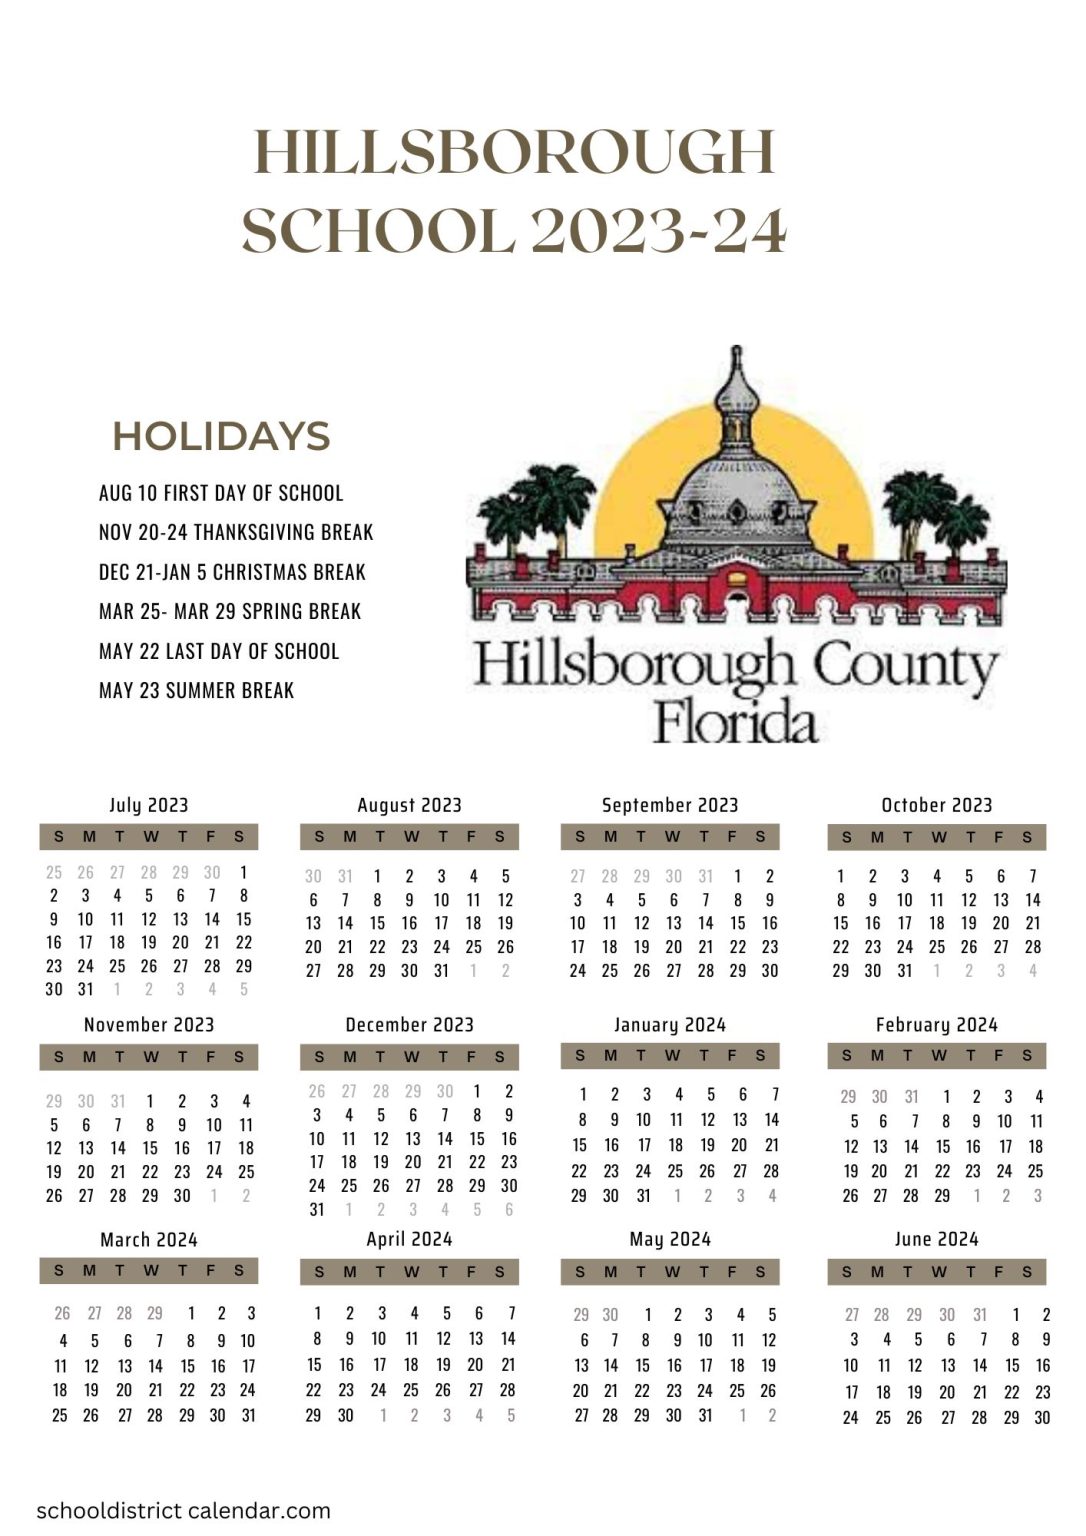 Hillsborough County School District Calendar Holidays 2023 2024